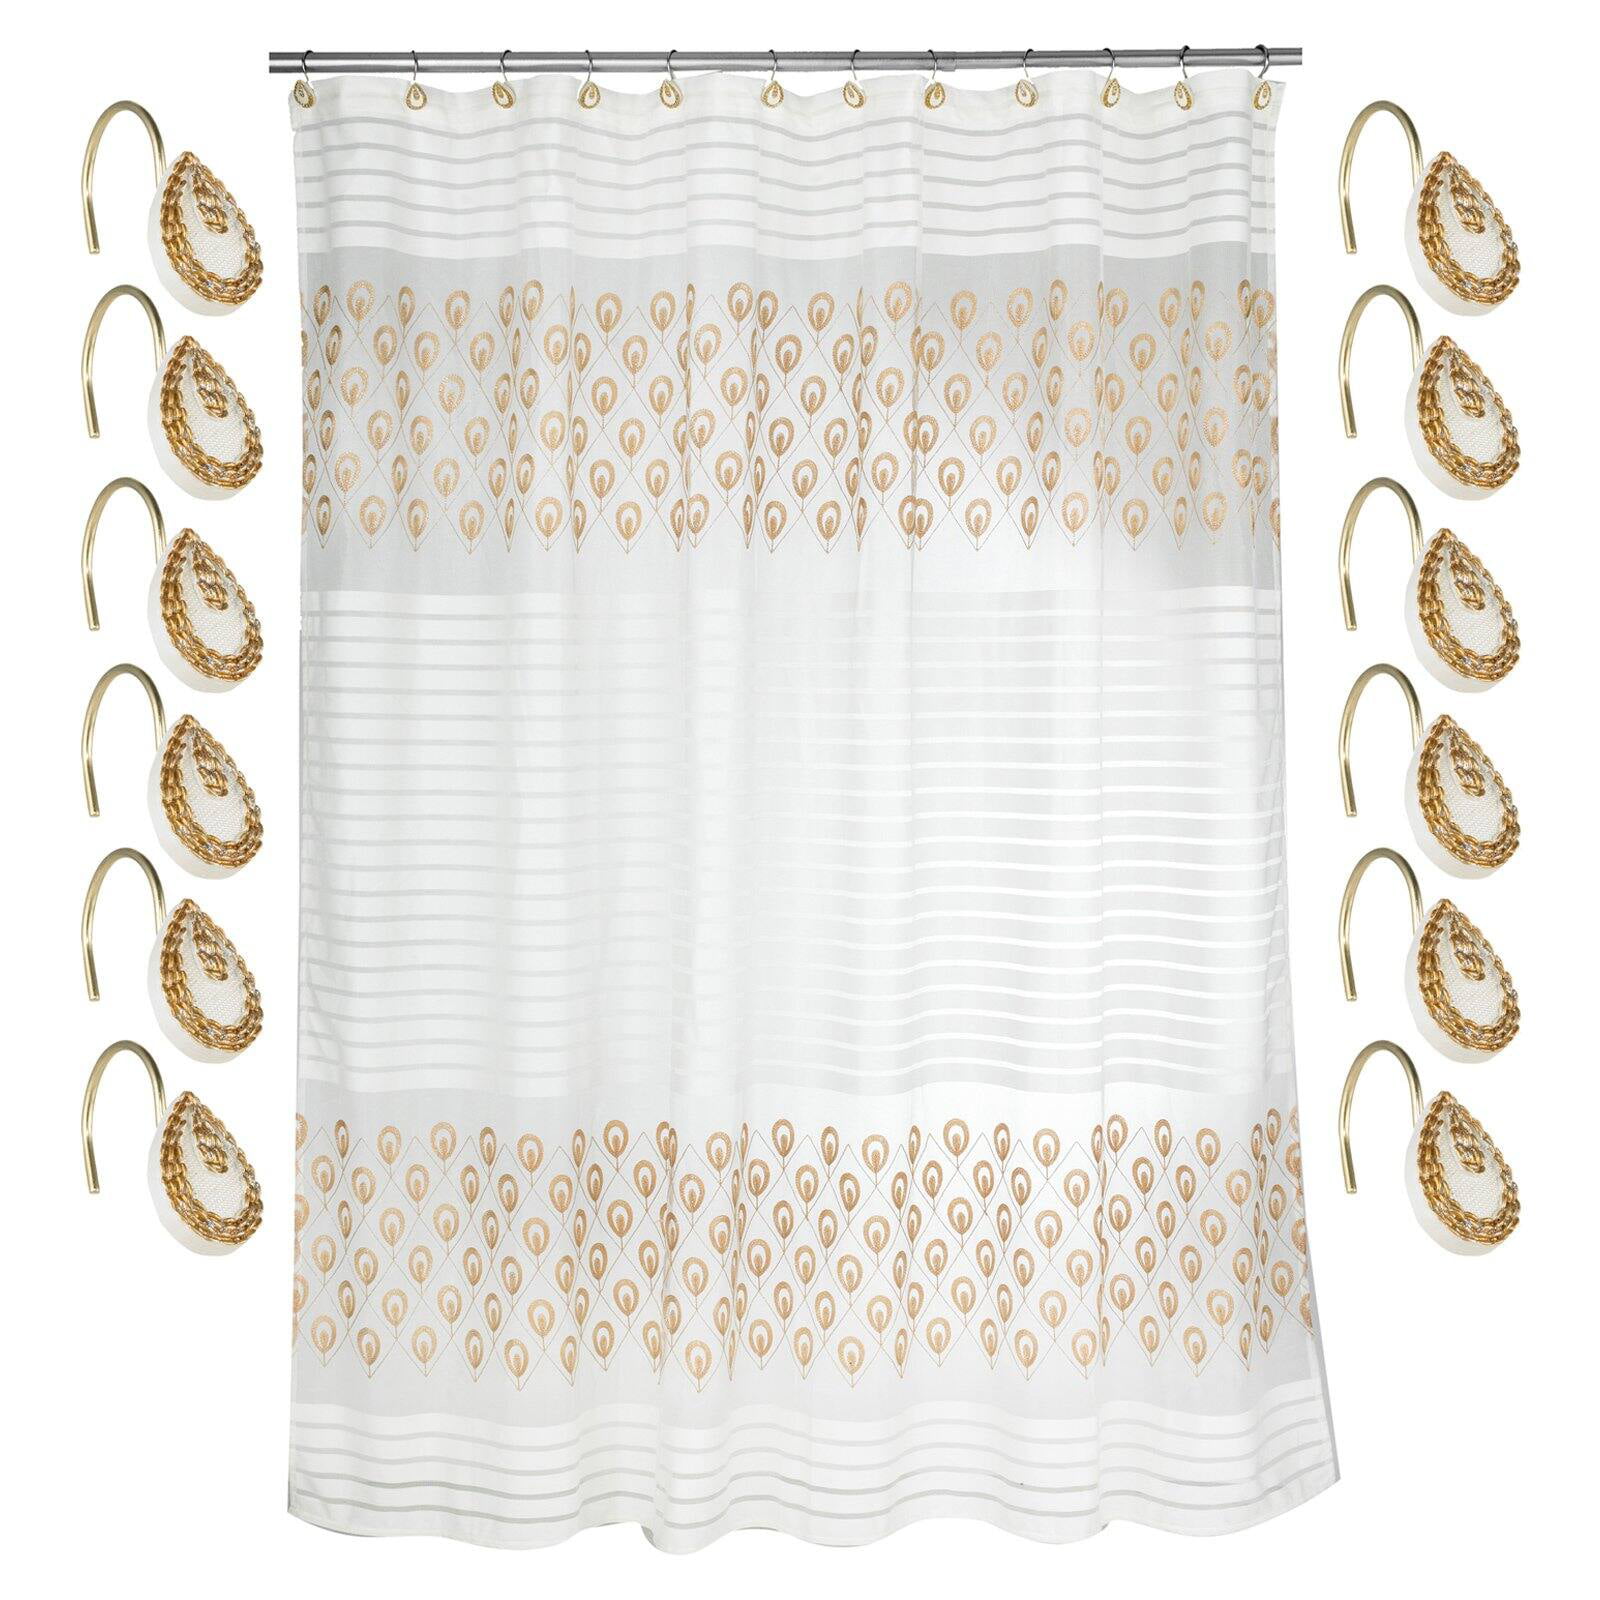 Beige/Gold Popular Bath Seraphina Bathroom Shower Curtain and Hooks Set 